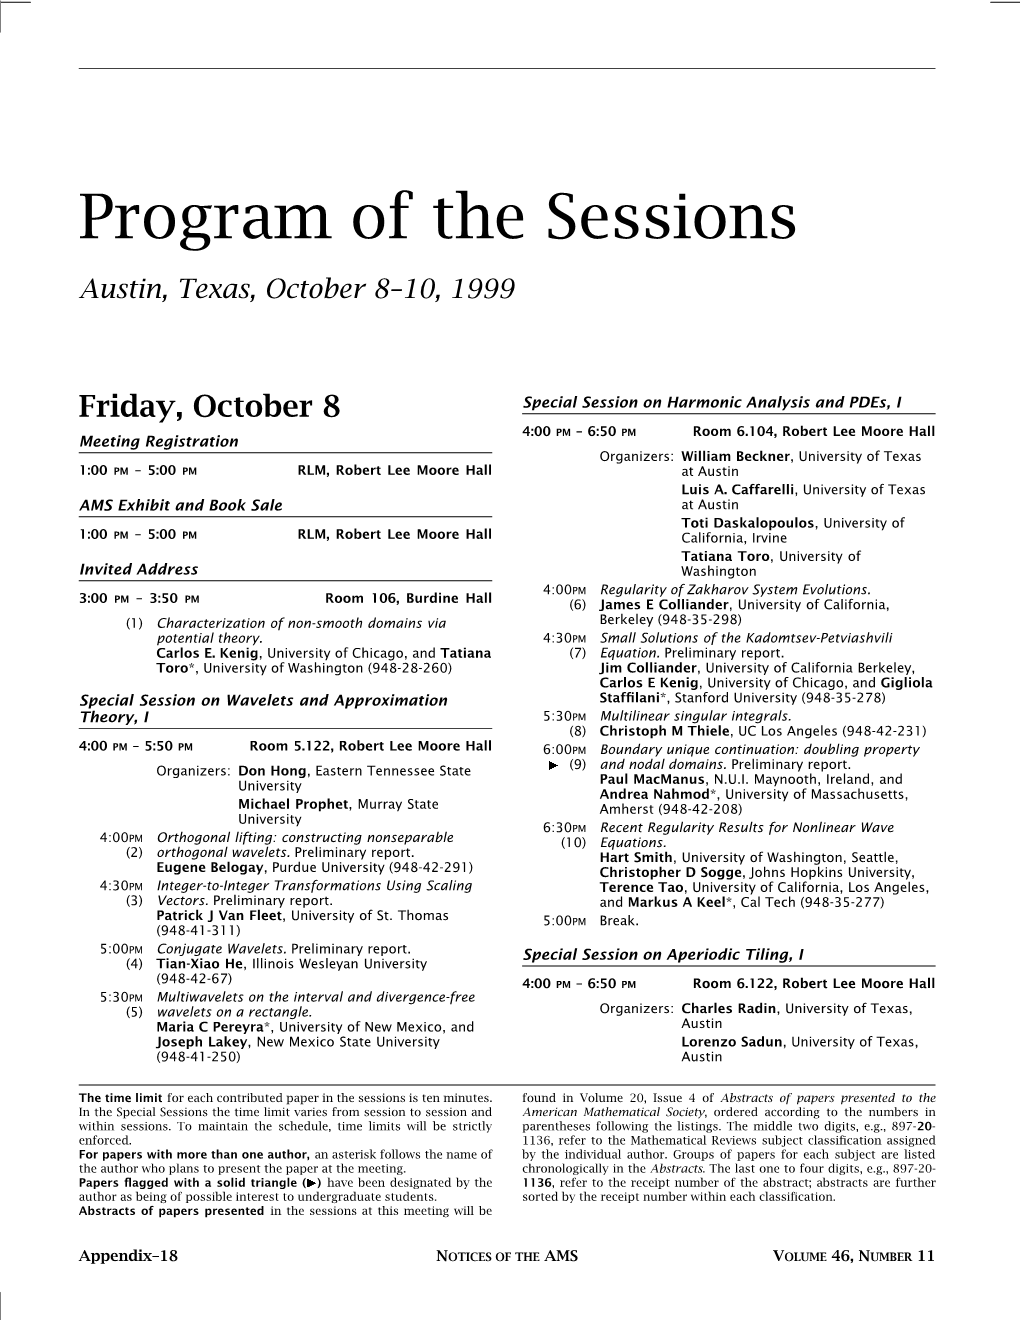 Program of the Sessions--Austin